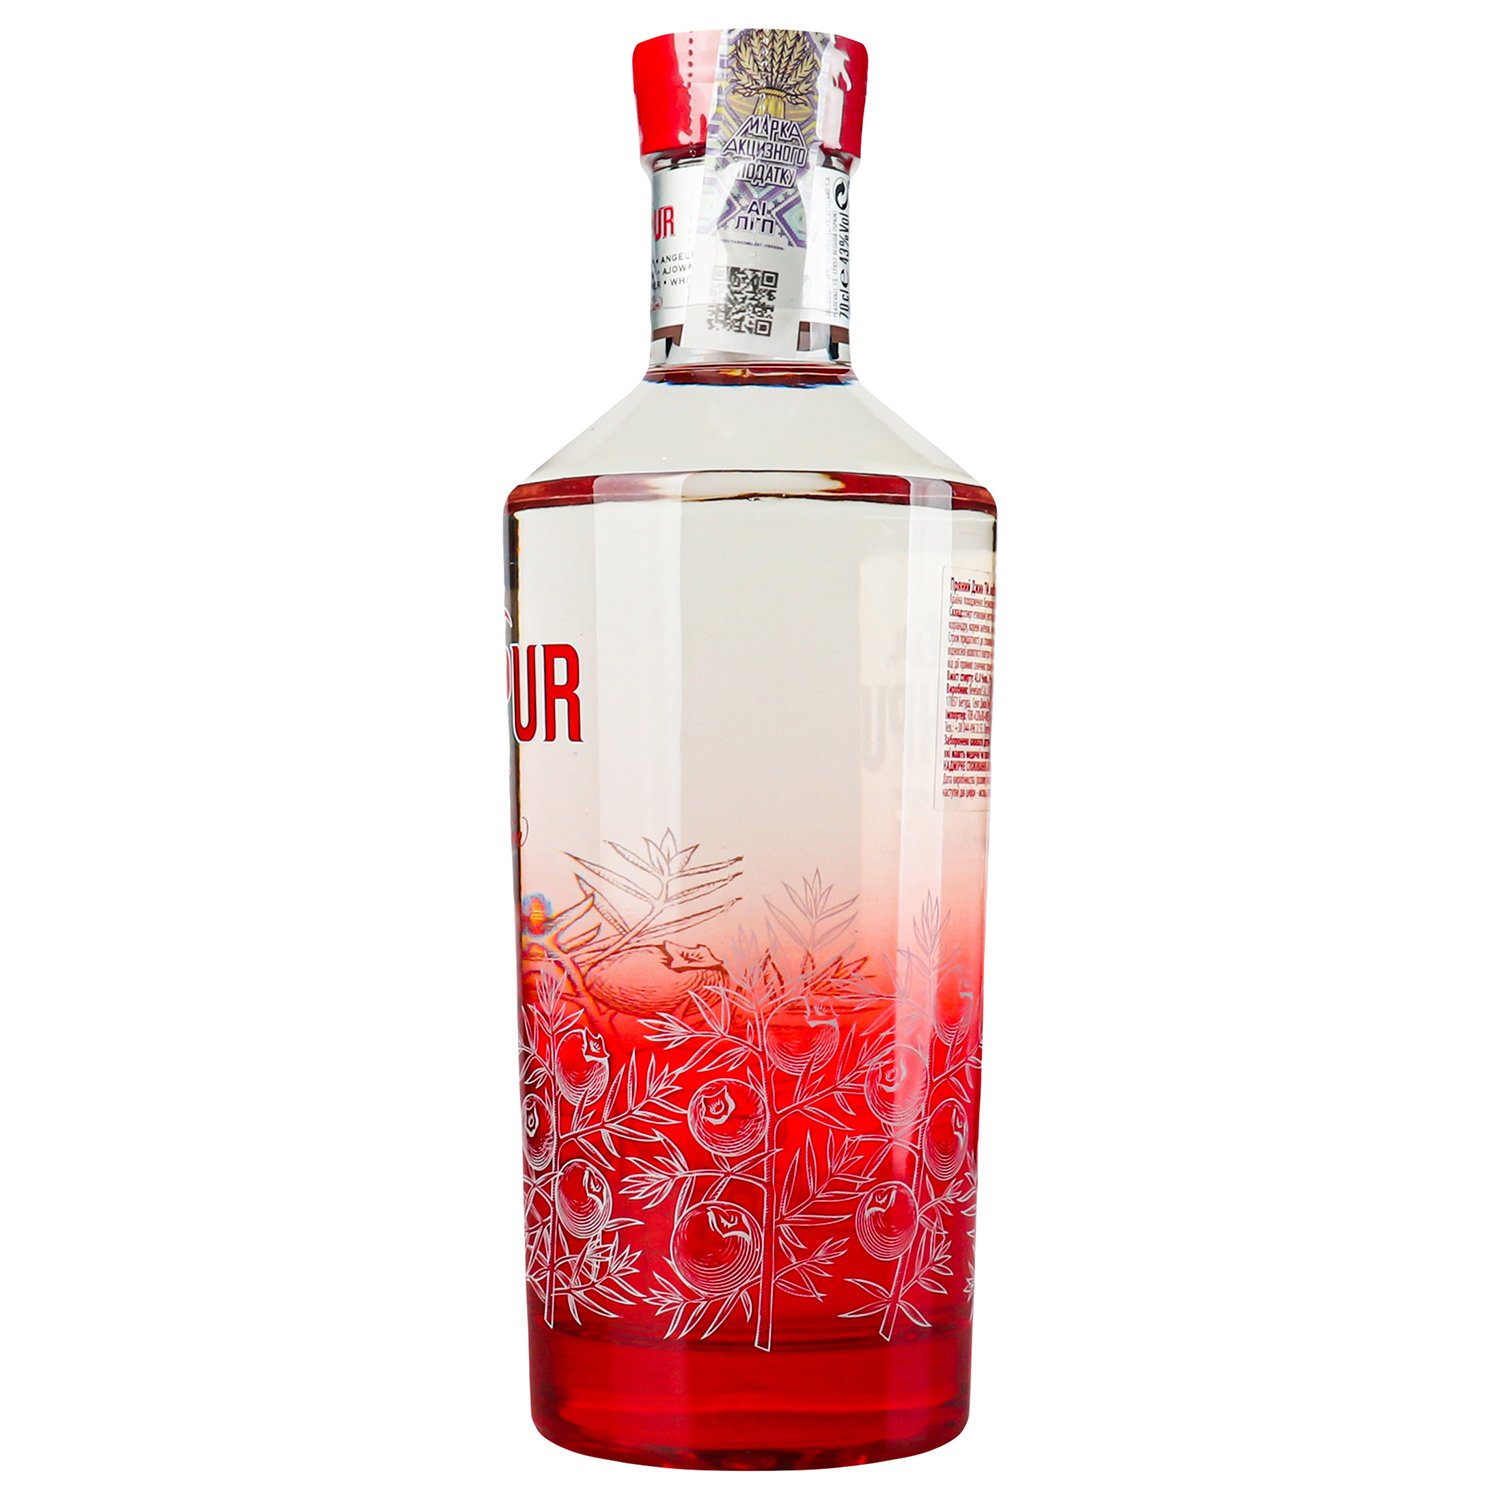 Джин Jodhpur Spicy London Dry Gin, 43%, 0,7 л (826419) - фото 2